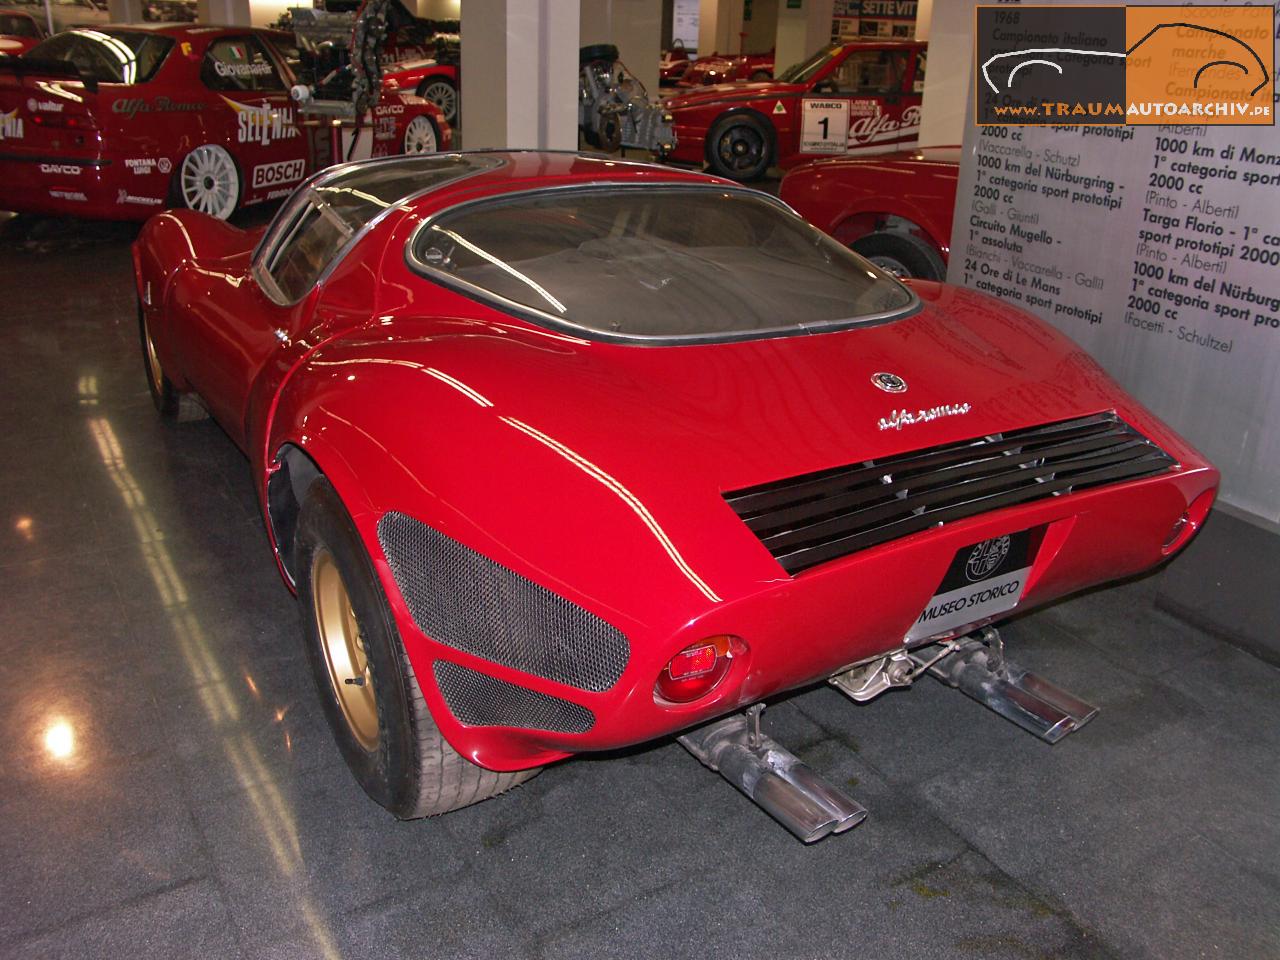 39 - Alfa Romeo Tipo 33 Stradale Scaglione '1967.jpg 179.9K